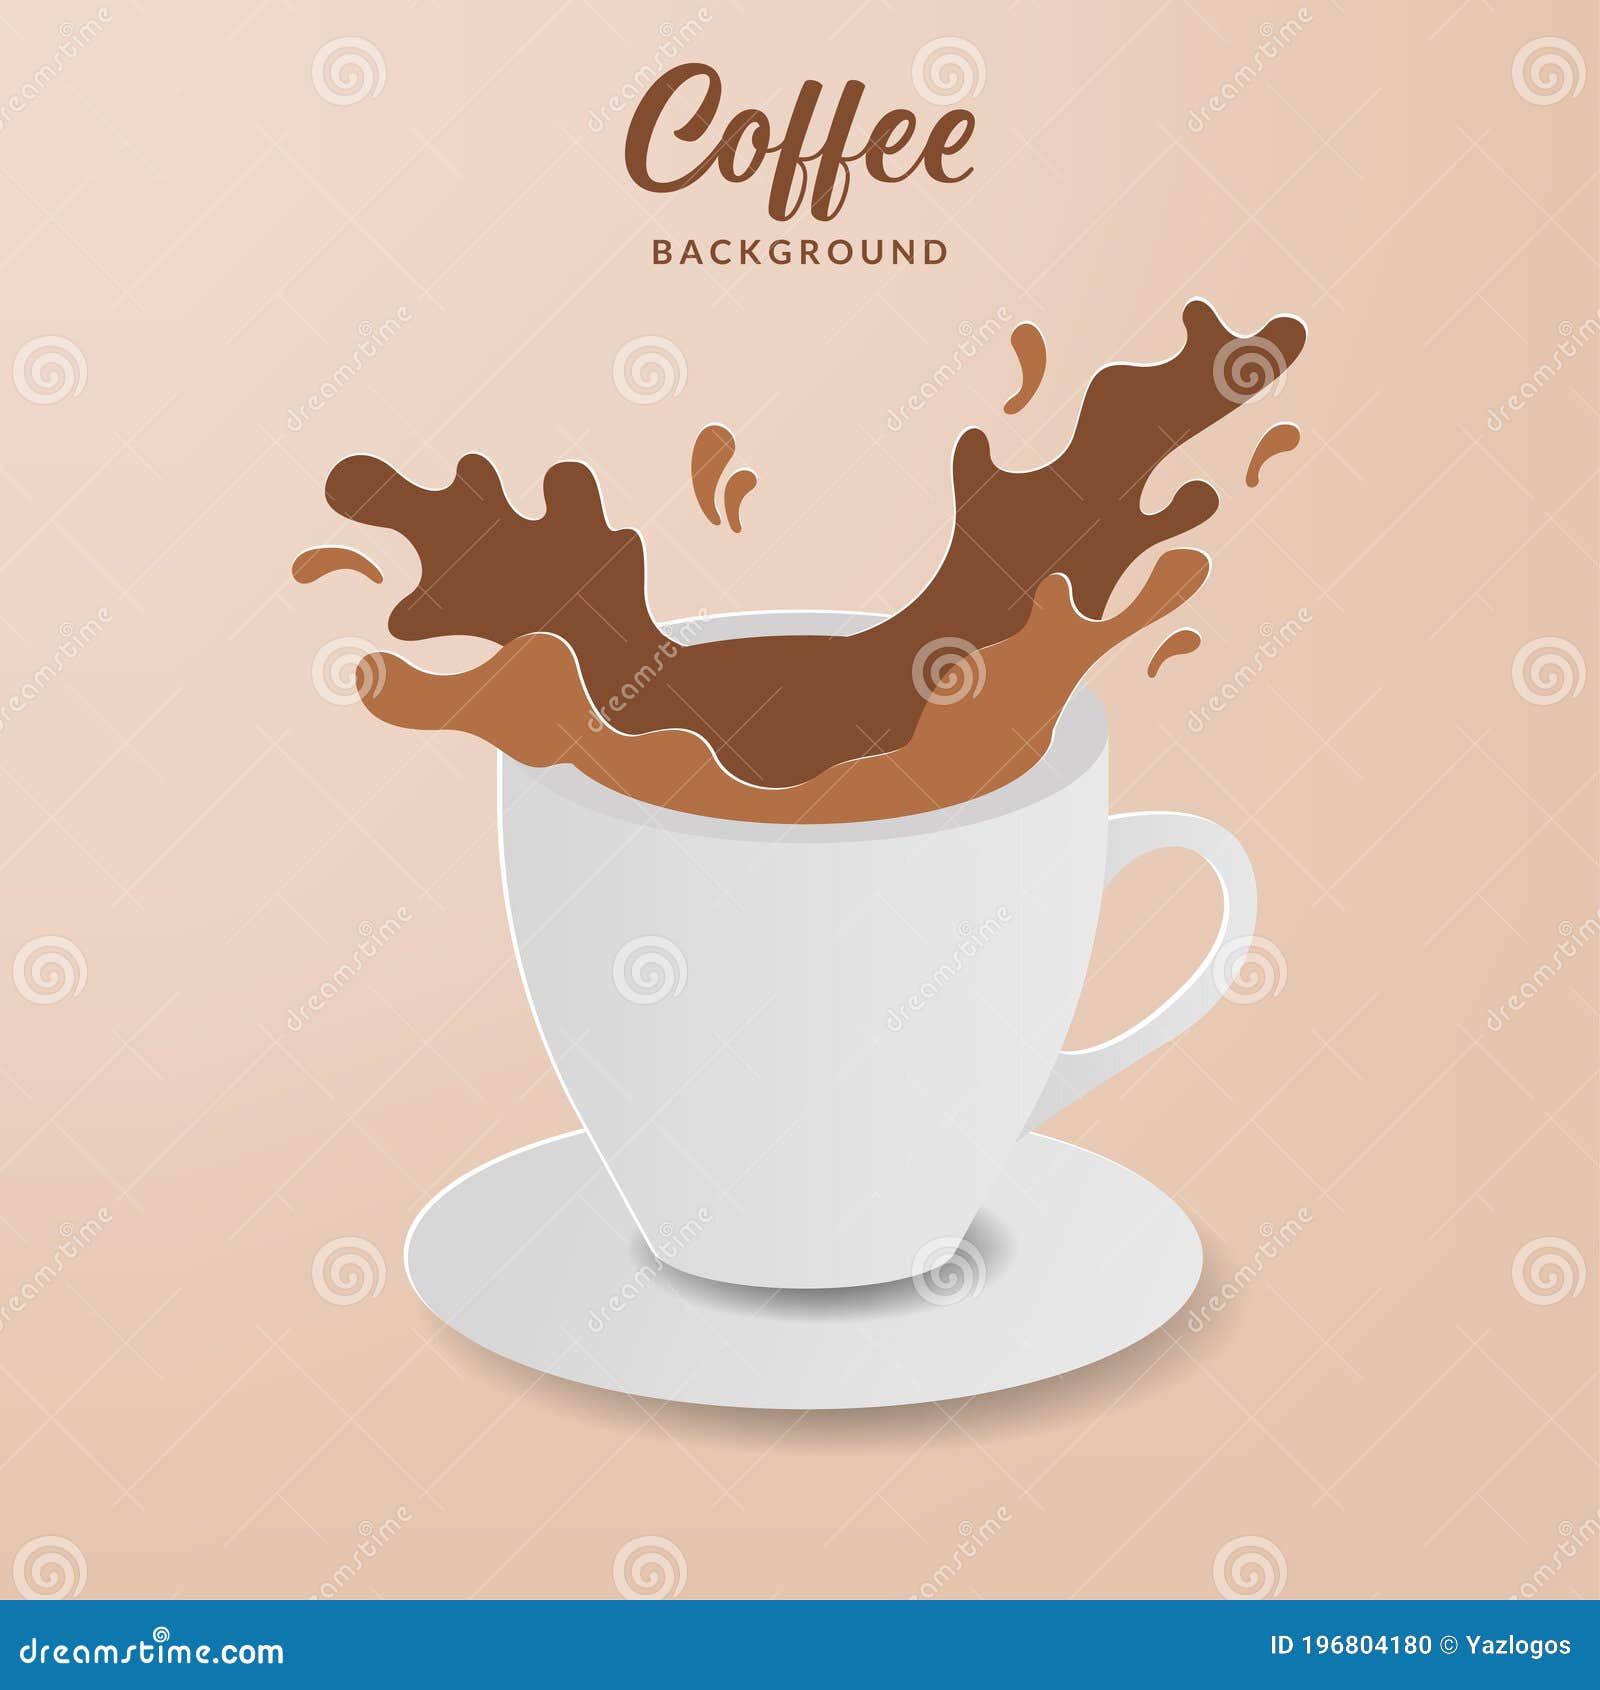 Coffee Splash Vector Illustration. Coffee Cup Background Design Stock  Vector - Illustration of beverage, shop: 196804180